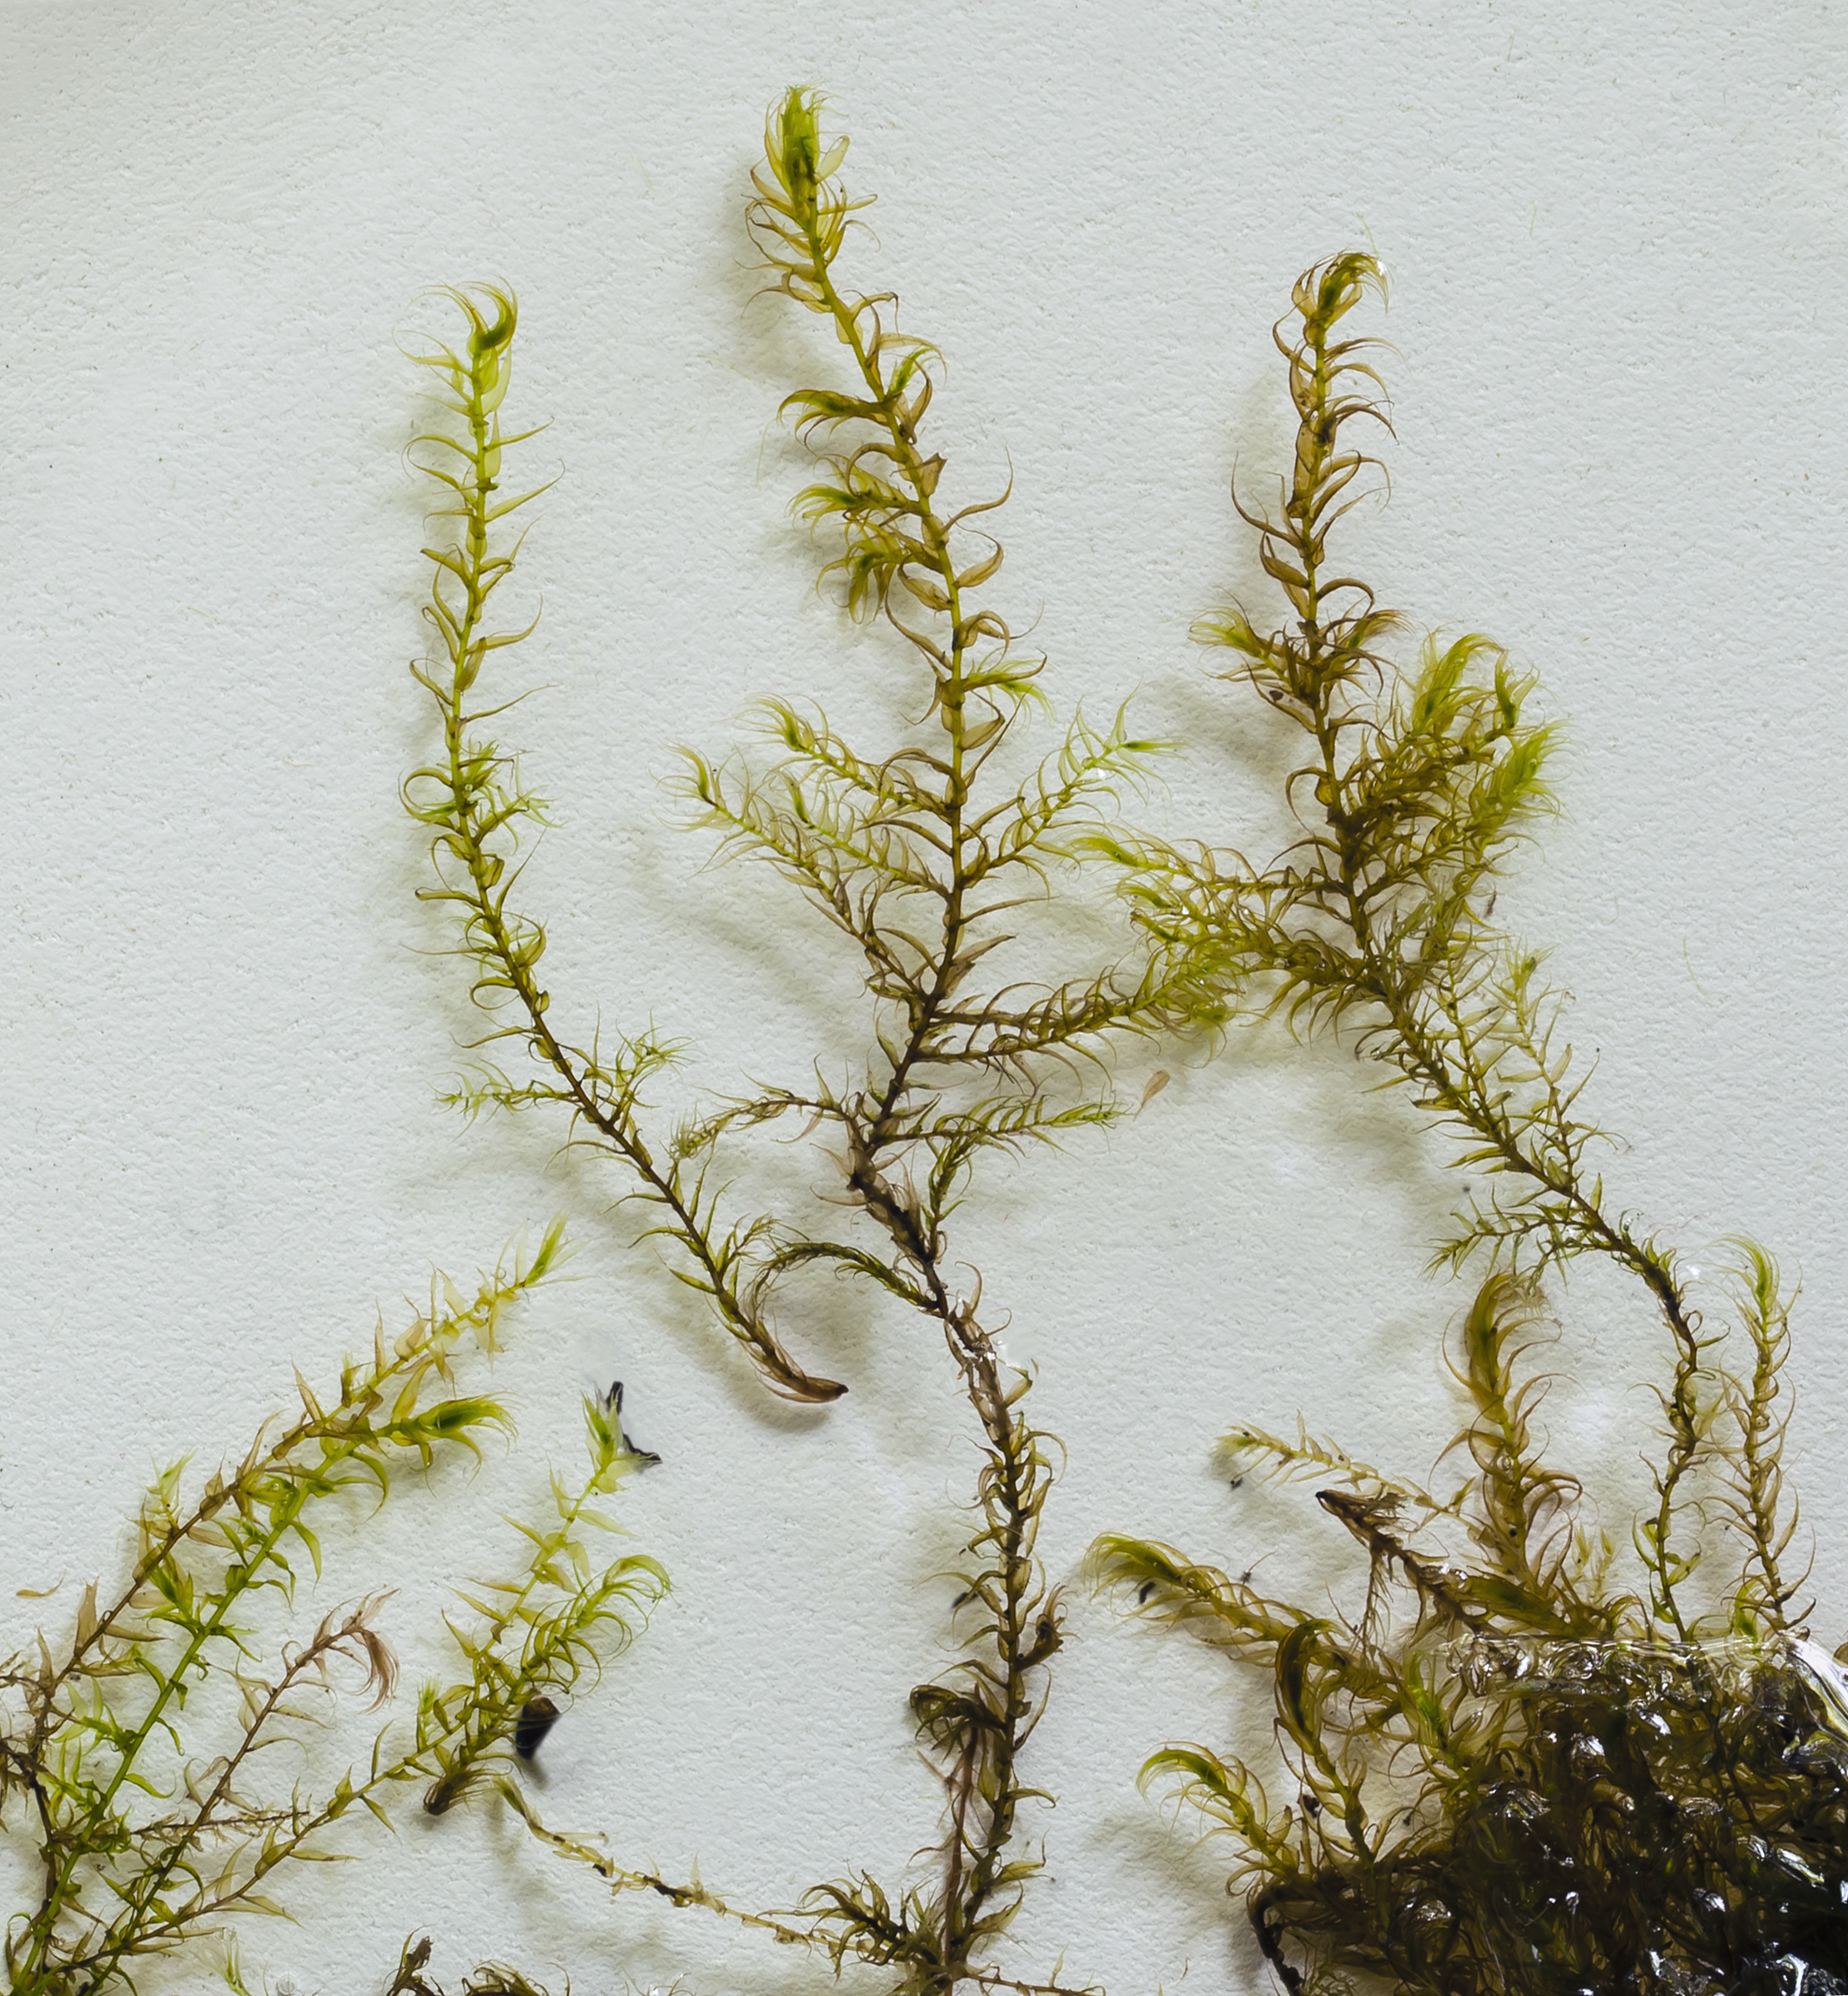 Drepanocladus longifolius (long-leaved hook moss) (7409066072)